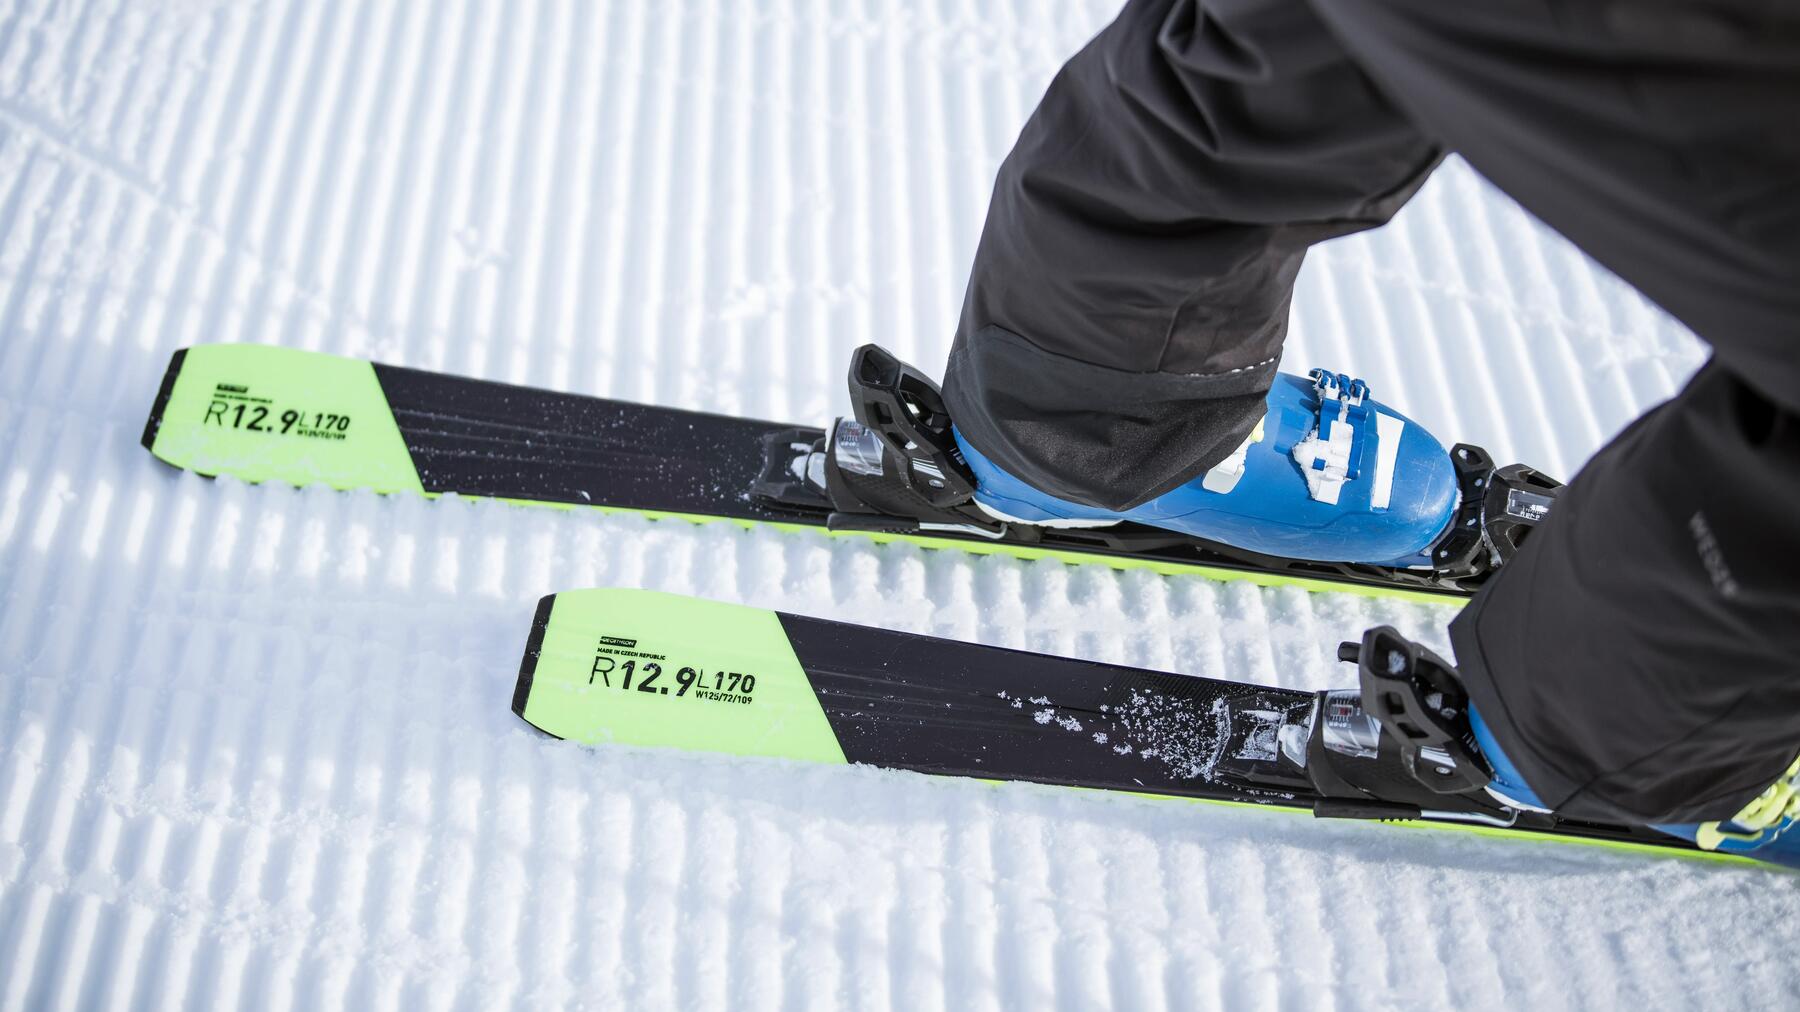 Les avantages de la location de ski 